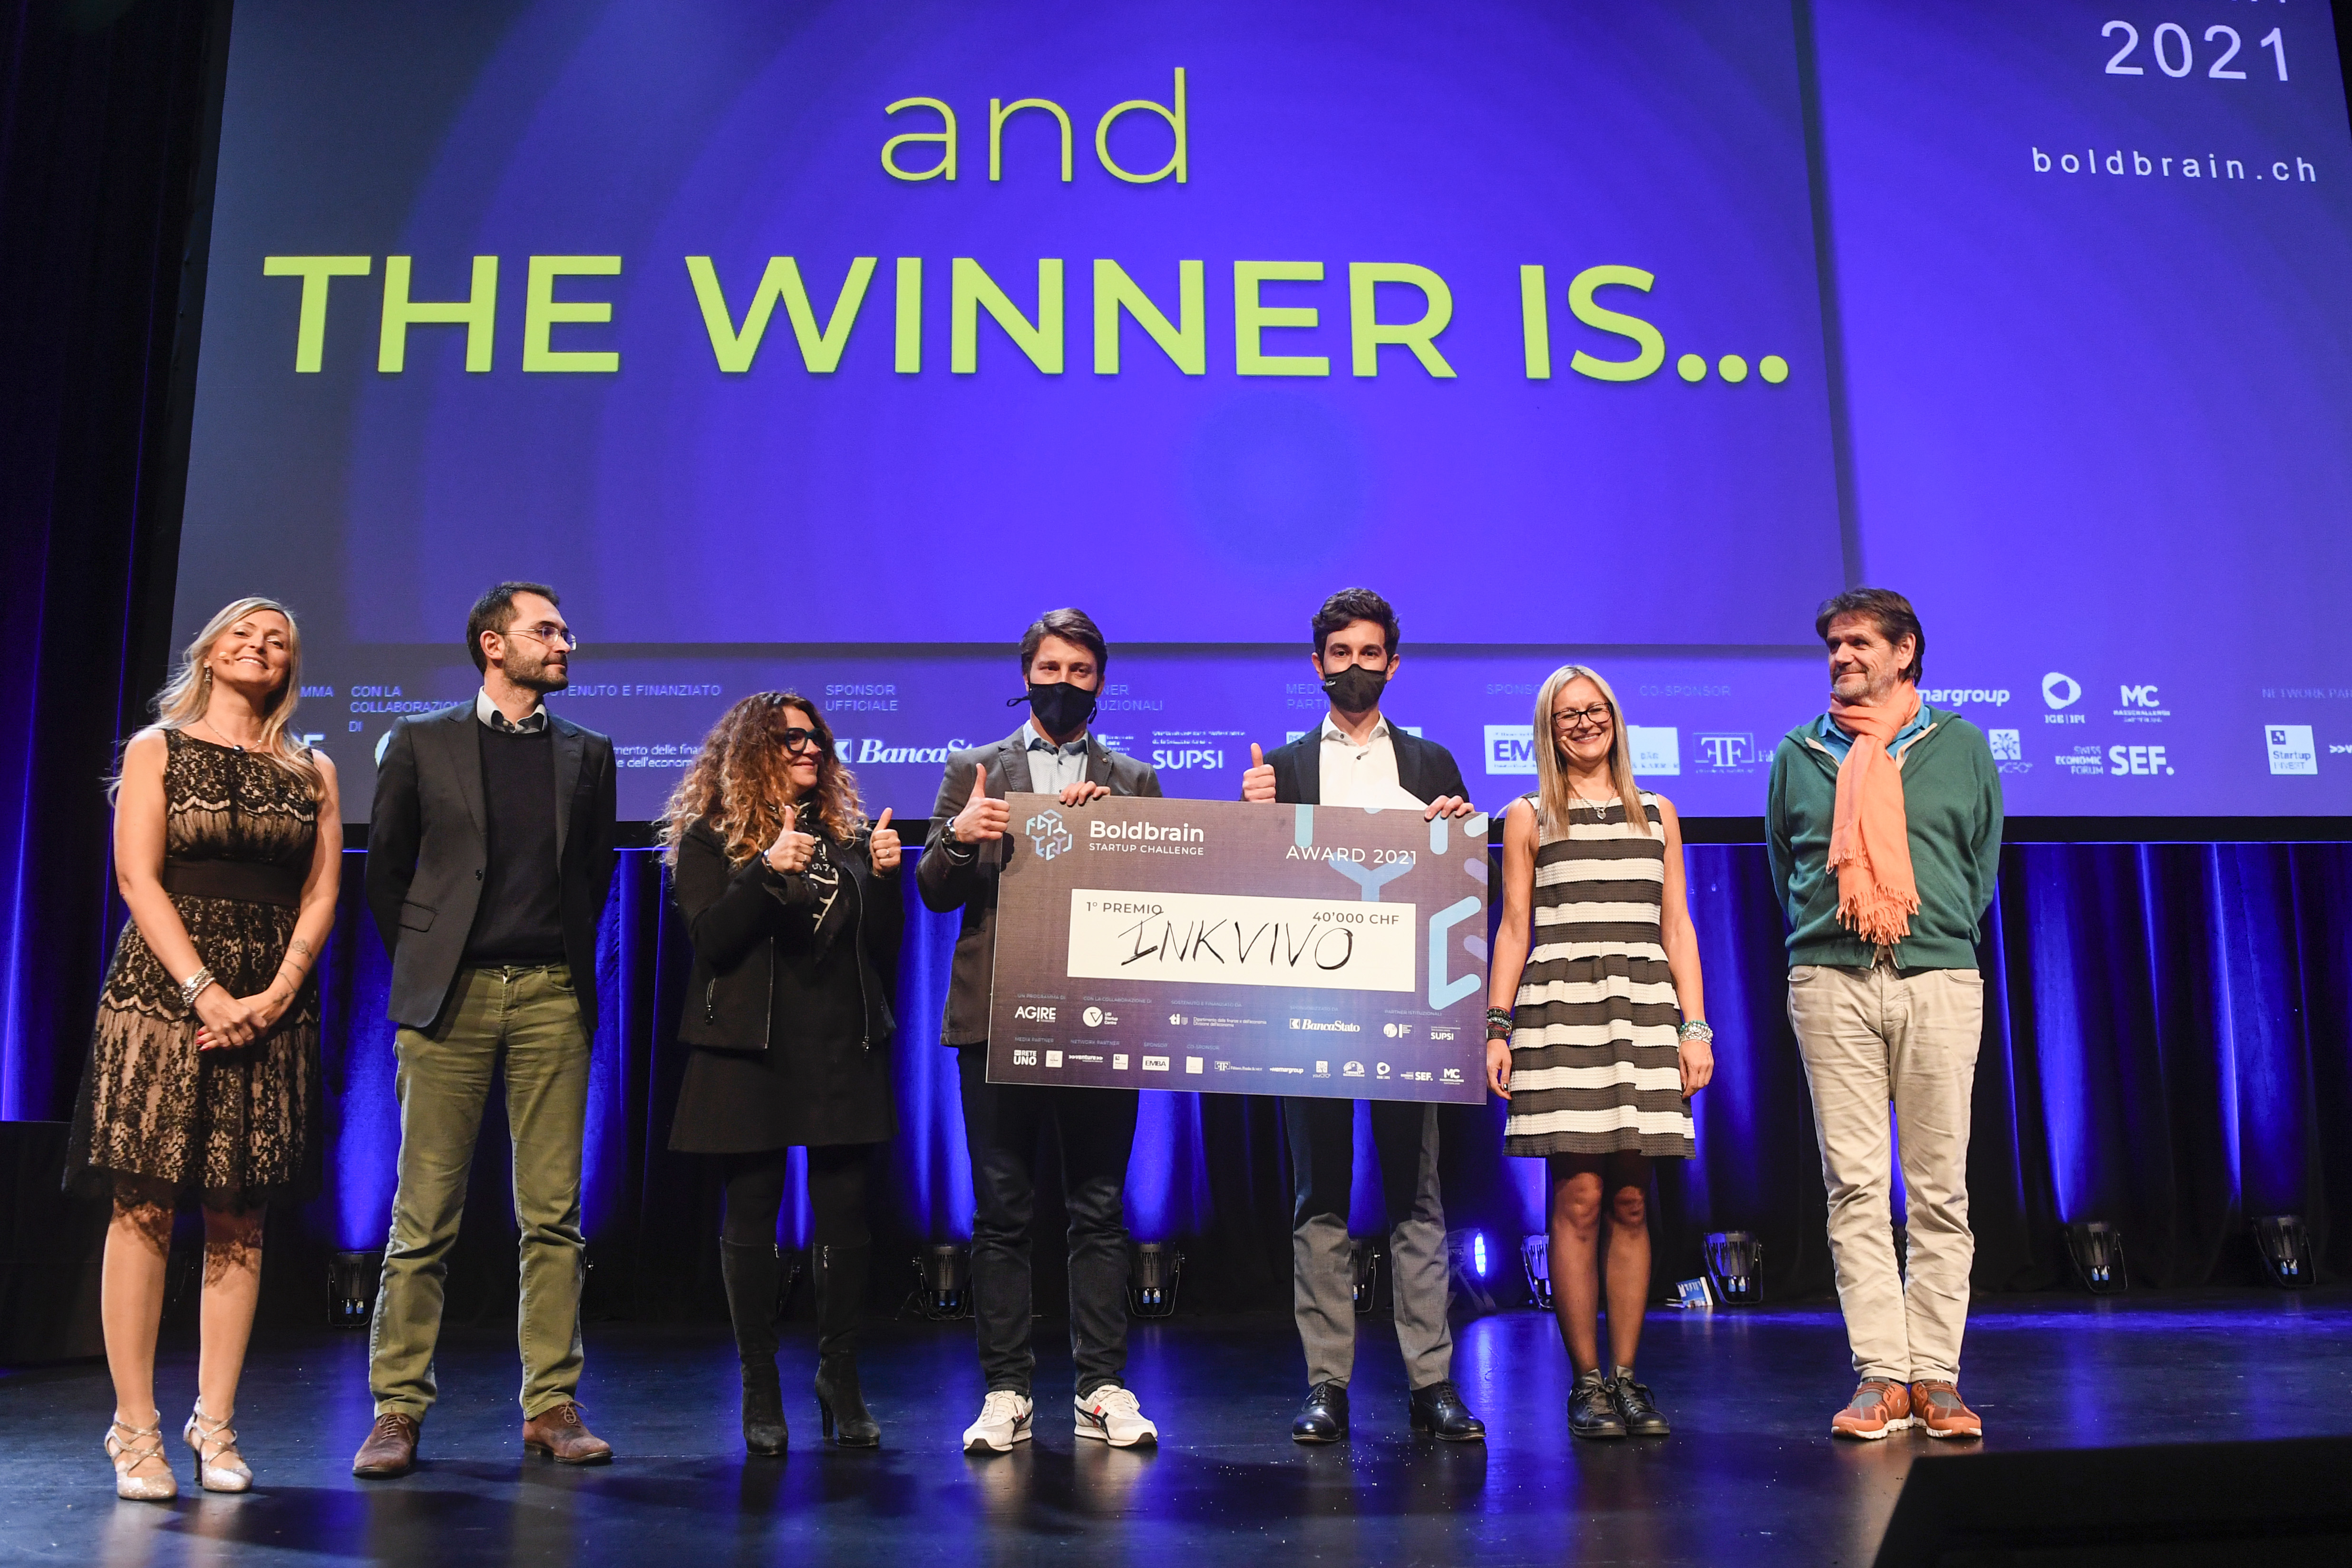 InkVivo wins Boldbrain Startup Challenge 2021. Congrats to Ethafa and motuSML as winners of Hemargroup Award